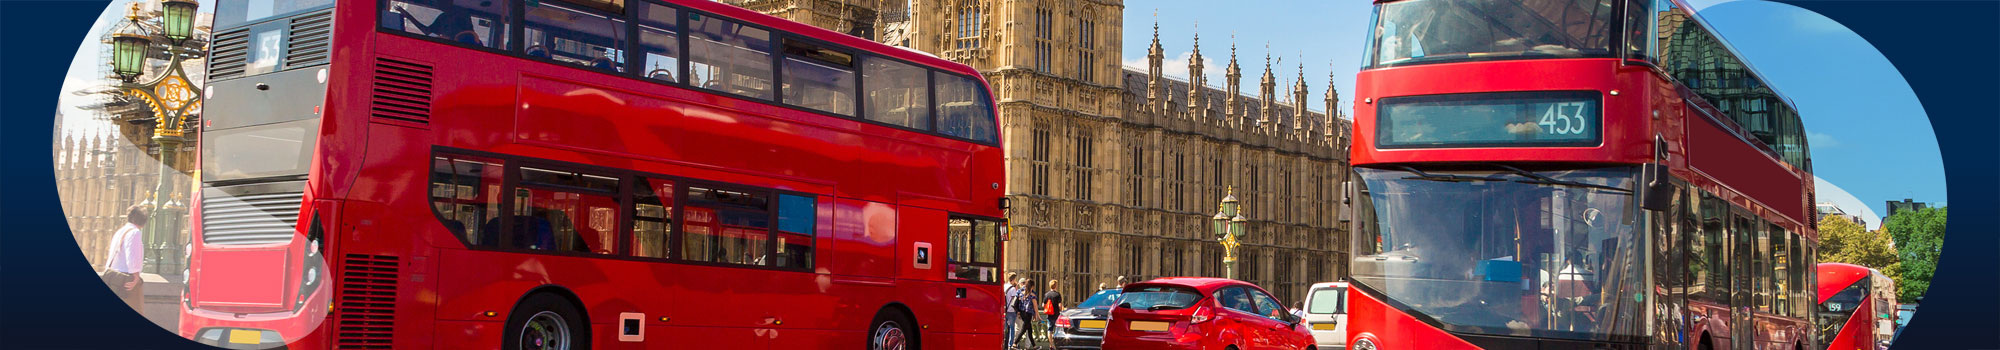 London buses in front of Big Ben